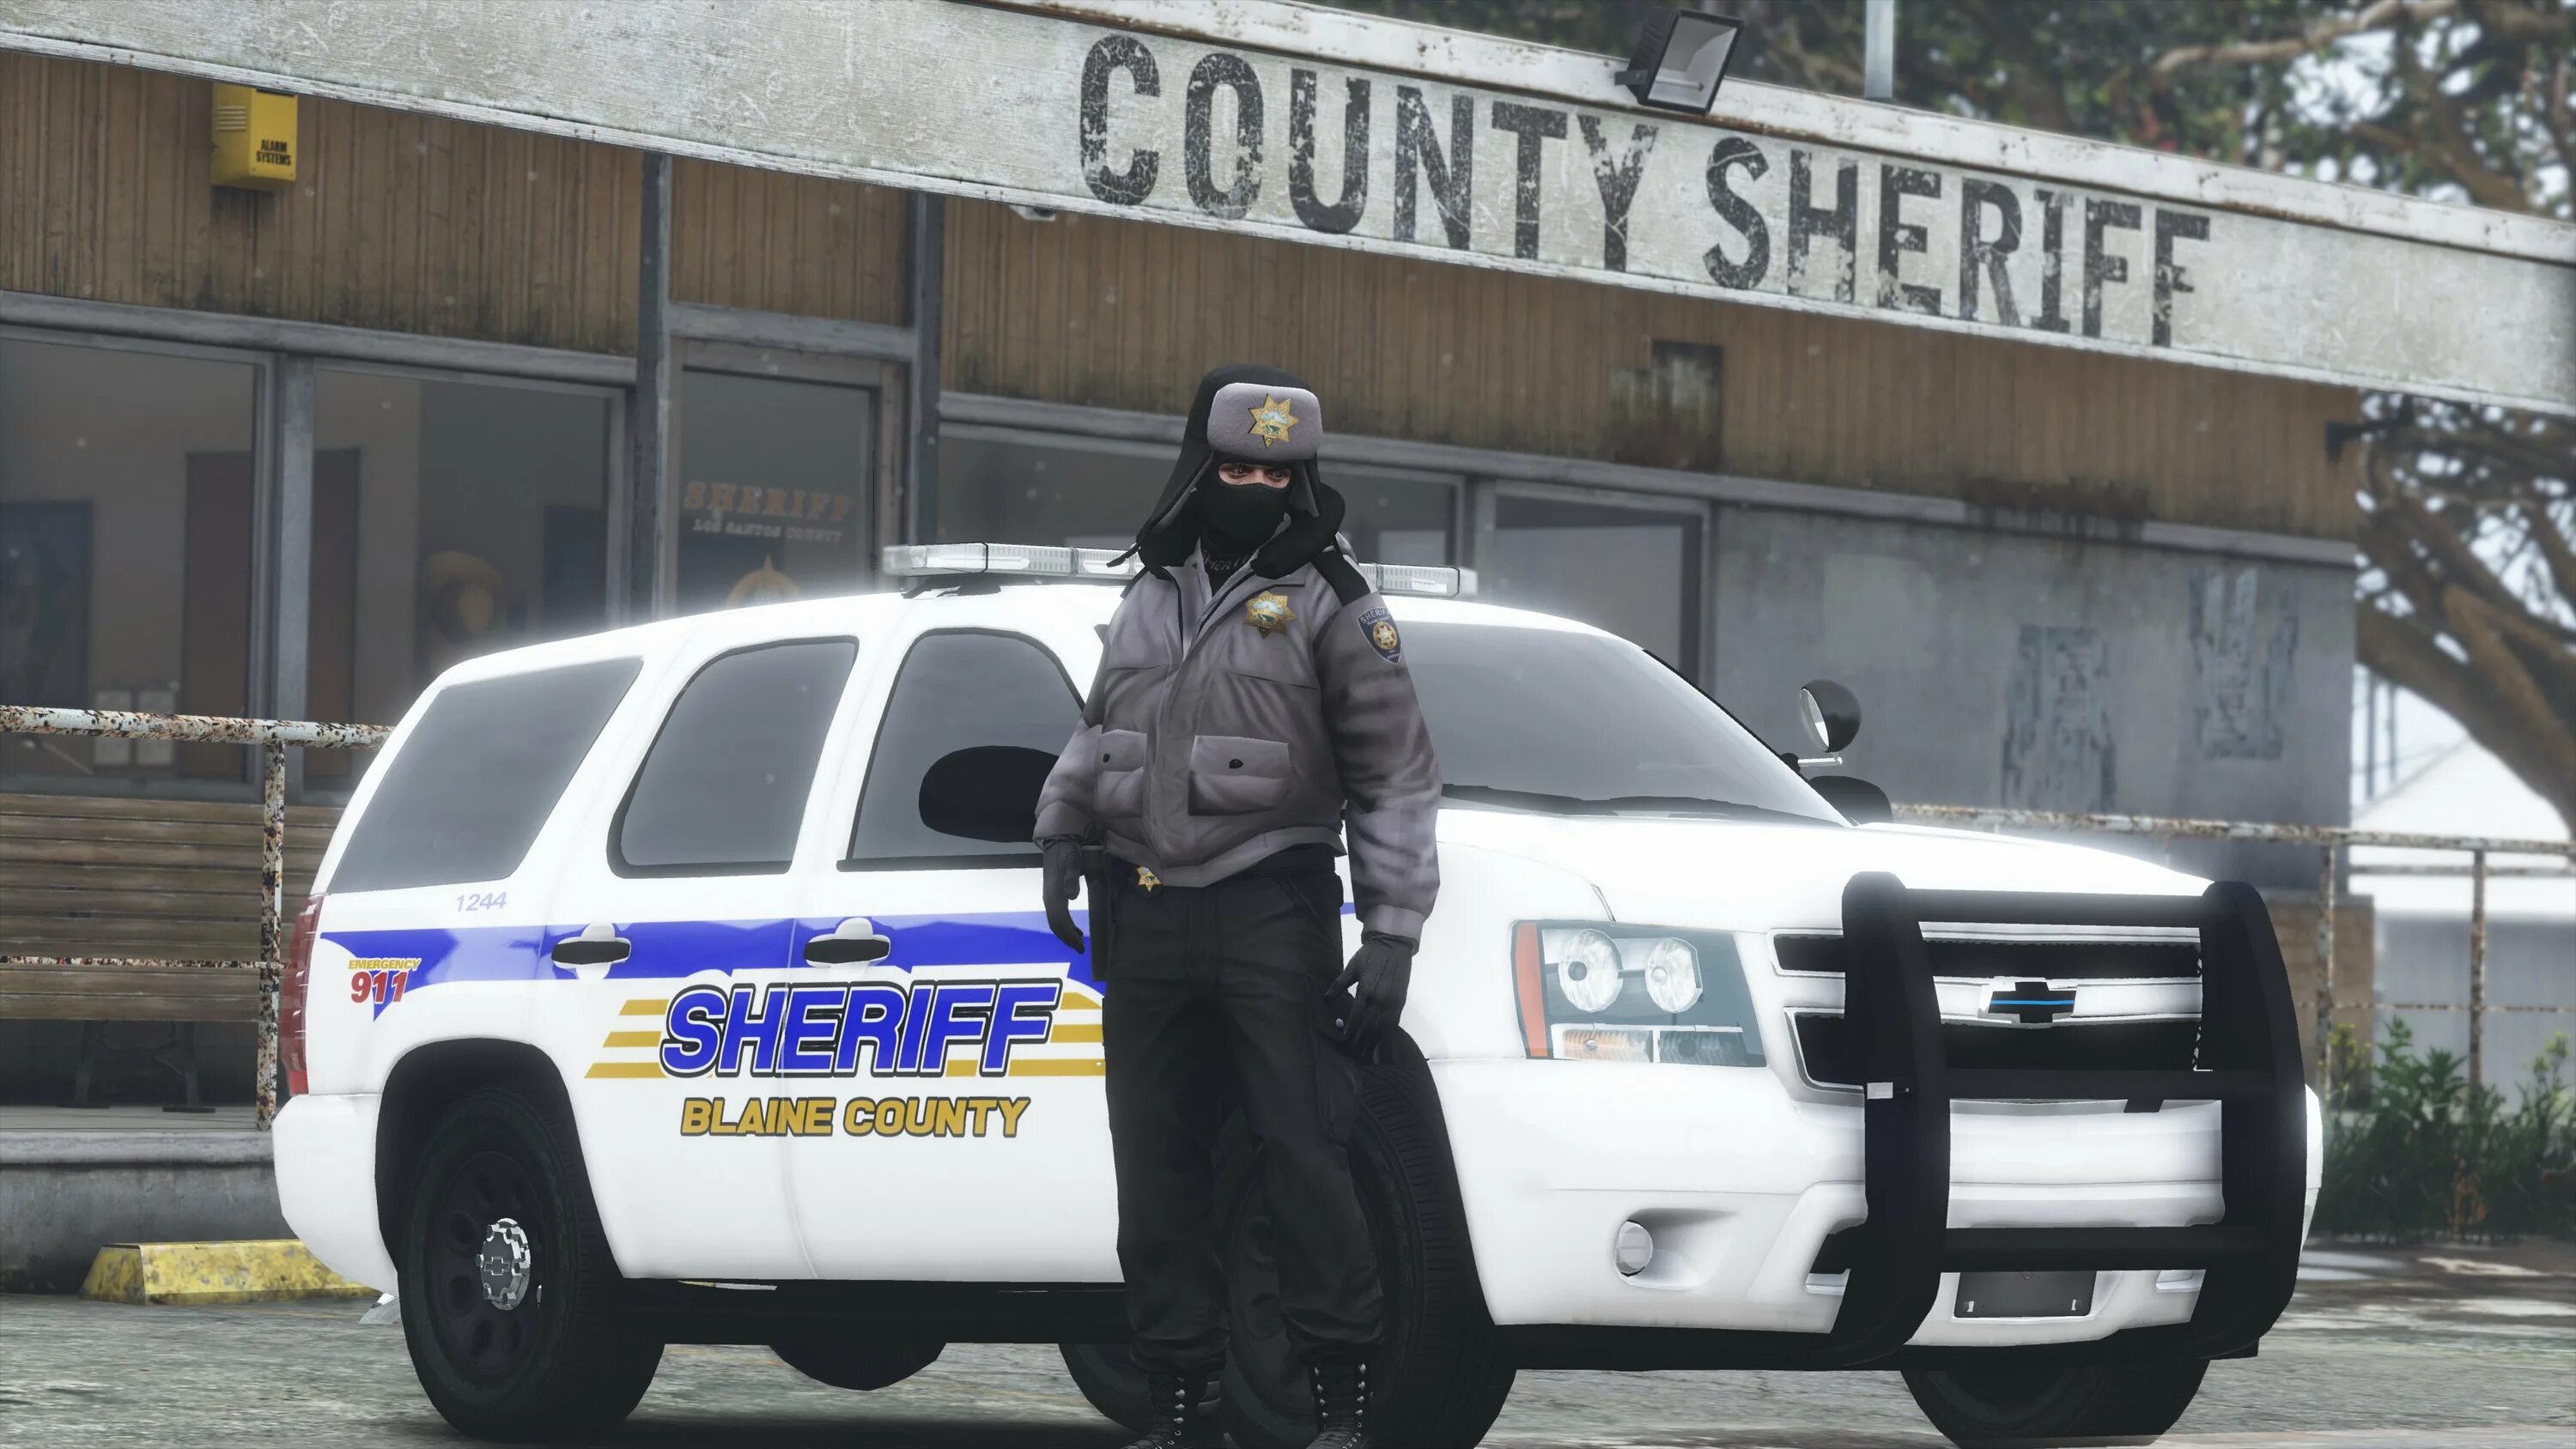 Полиц хелпер. Sheriff Blaine County GTA 5 texture. Blaine County Sheriff Office texture GTA 5. Lake County Sheriff. Blaine County Sheriff uniforms GTA 5.